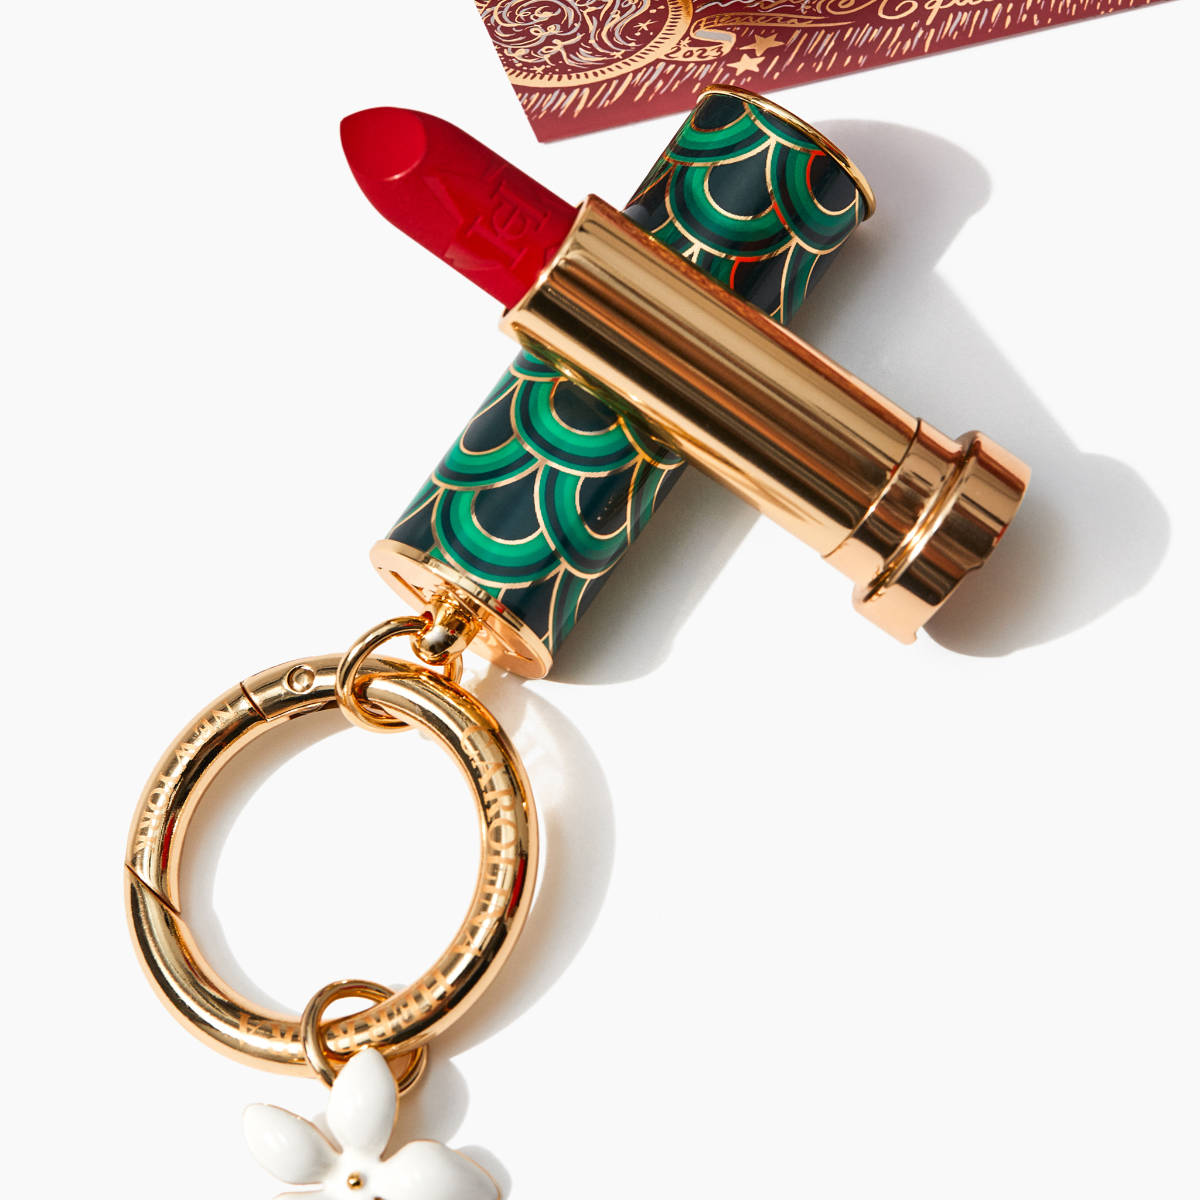 Herrera Beauty Presents Its Limited Edition Fabulous Kiss Glitz Lipstick